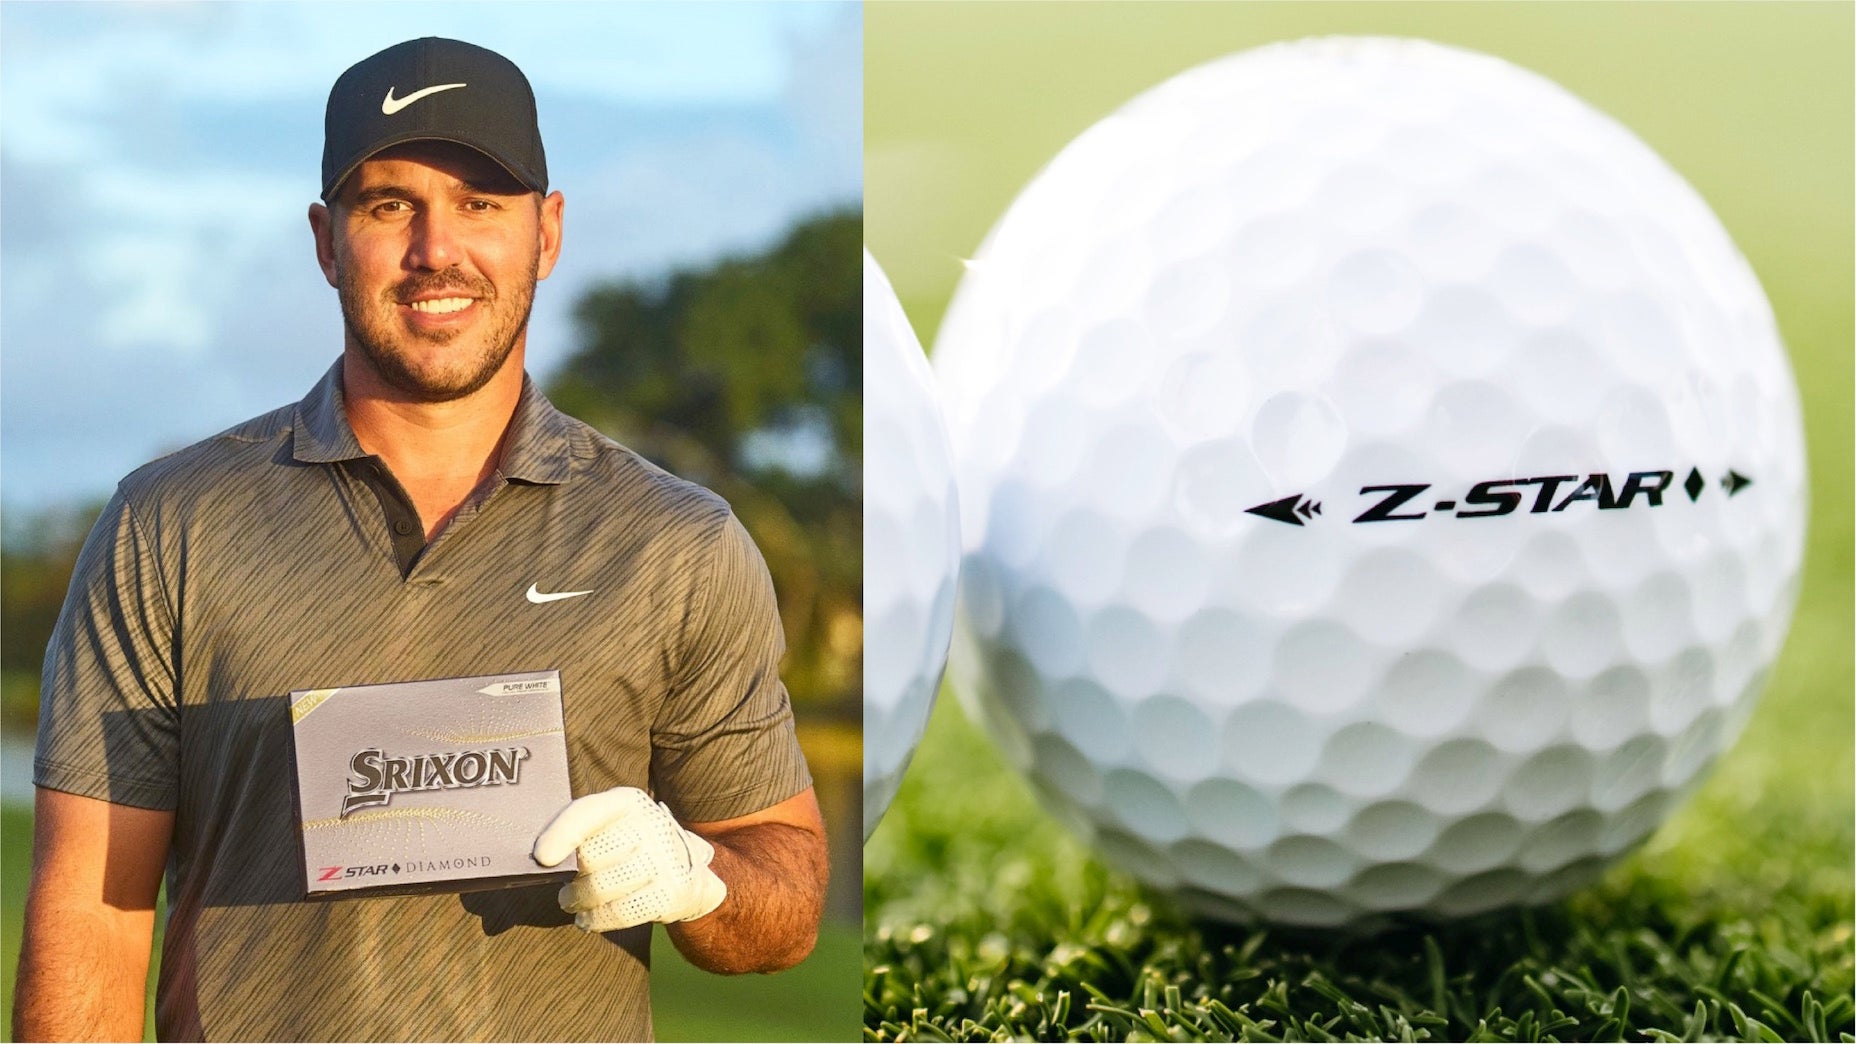 The new Srixon Z-Star Diamond golf ball from Brooks Koepka.